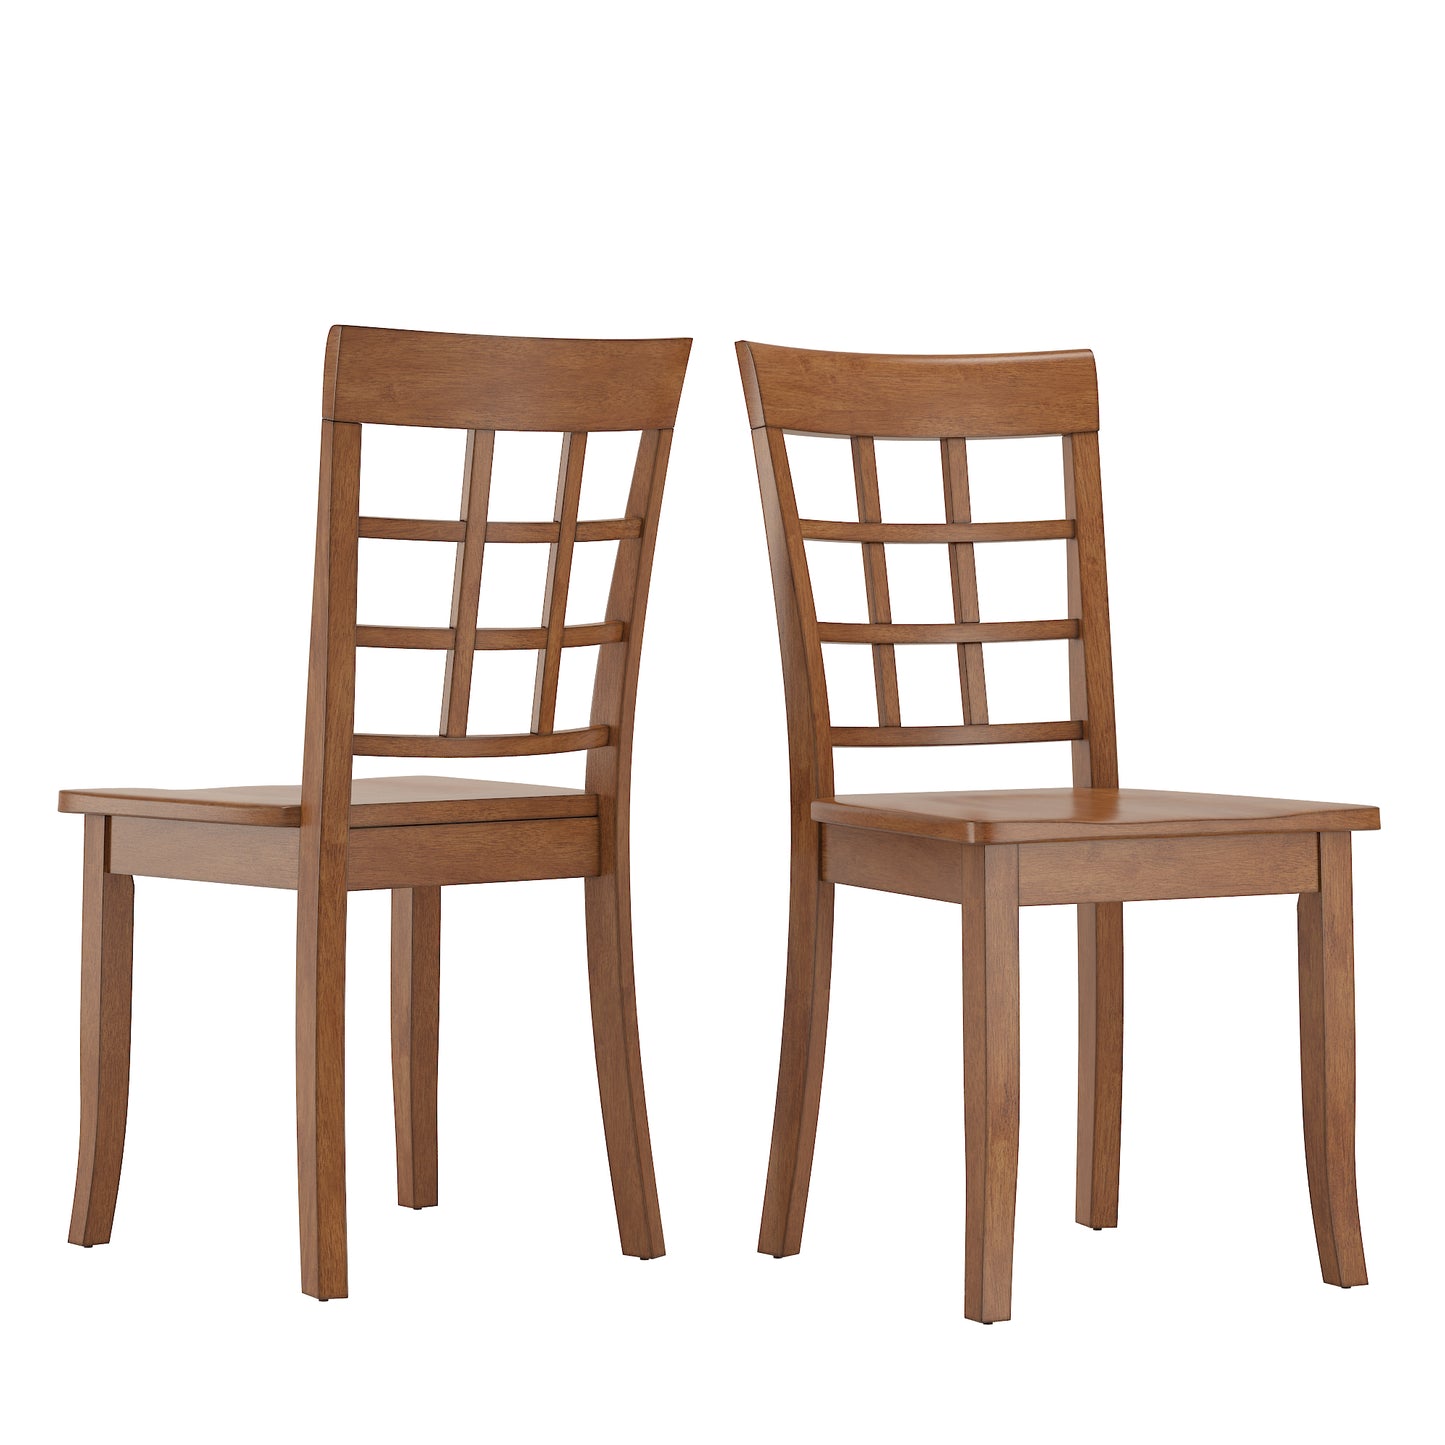 Window Back Wood Dining Chairs (Set of 2) - Oak Finish